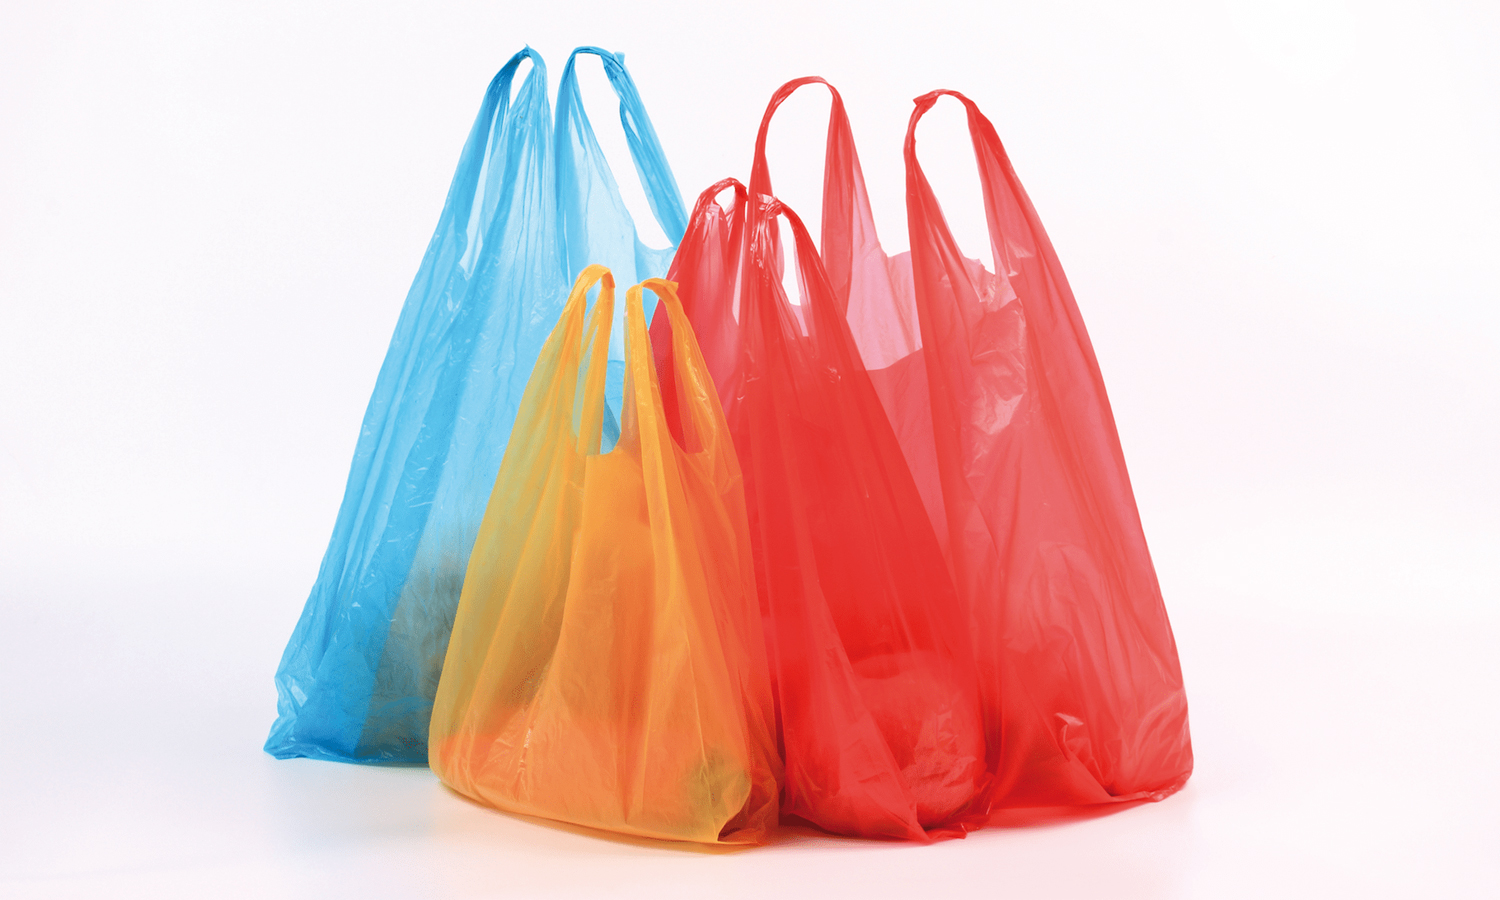 10. Plastic Bag Nail Transfer Designs - wide 10